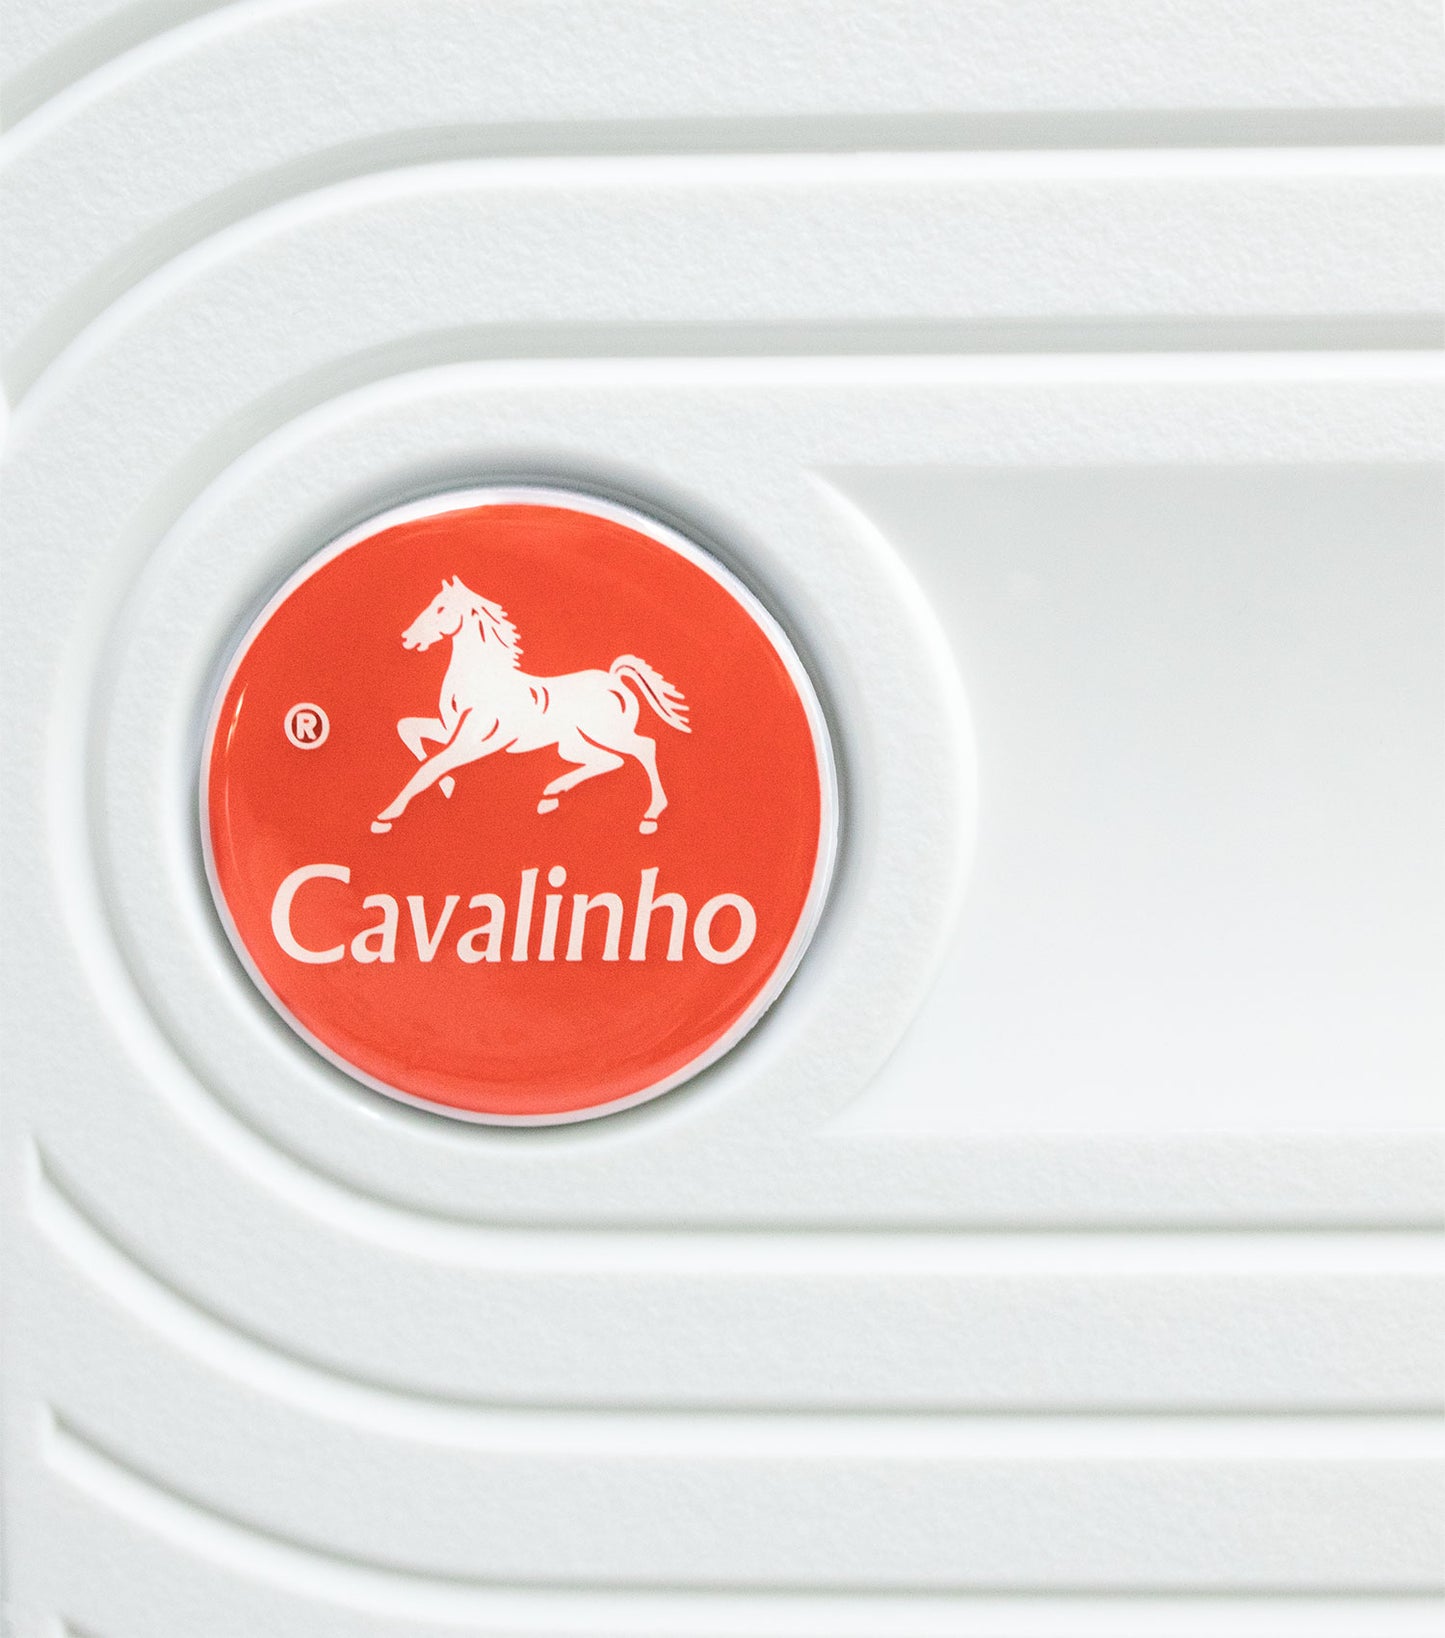 Cavalinho Colorful Carry-on Hardside Luggage (19") - 19 inch White - 68020004.06.19_P05